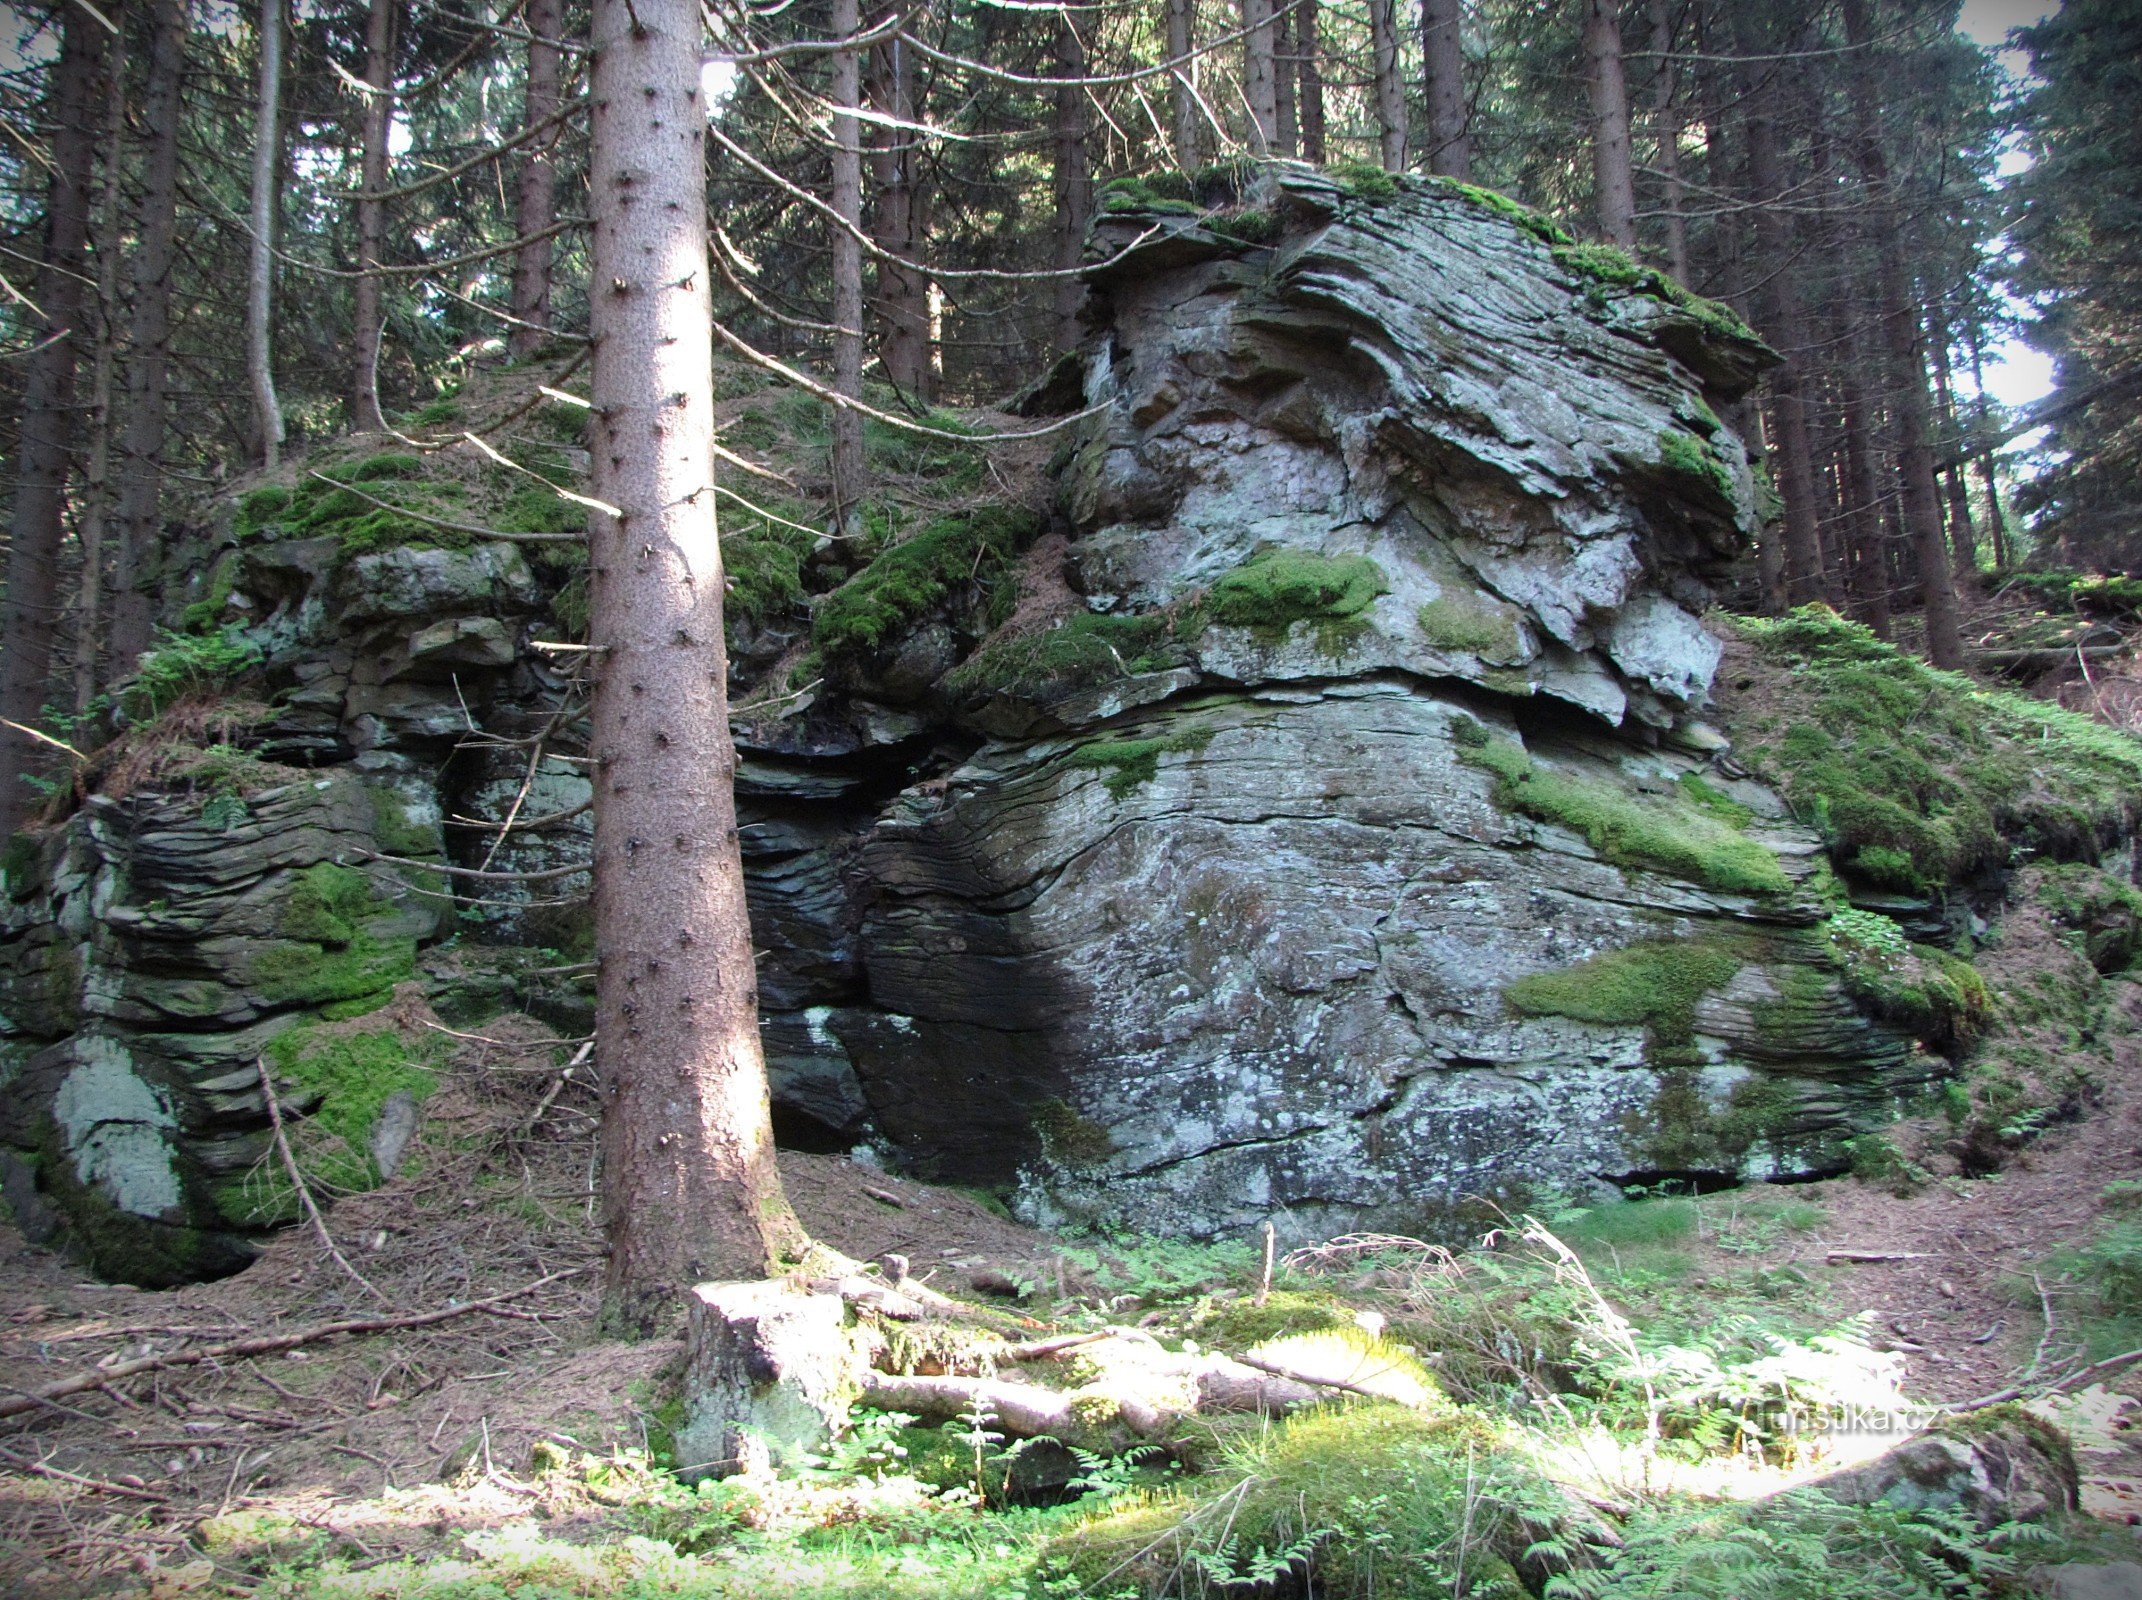 Žárovy vrch と Plošina の間の岩のサドル